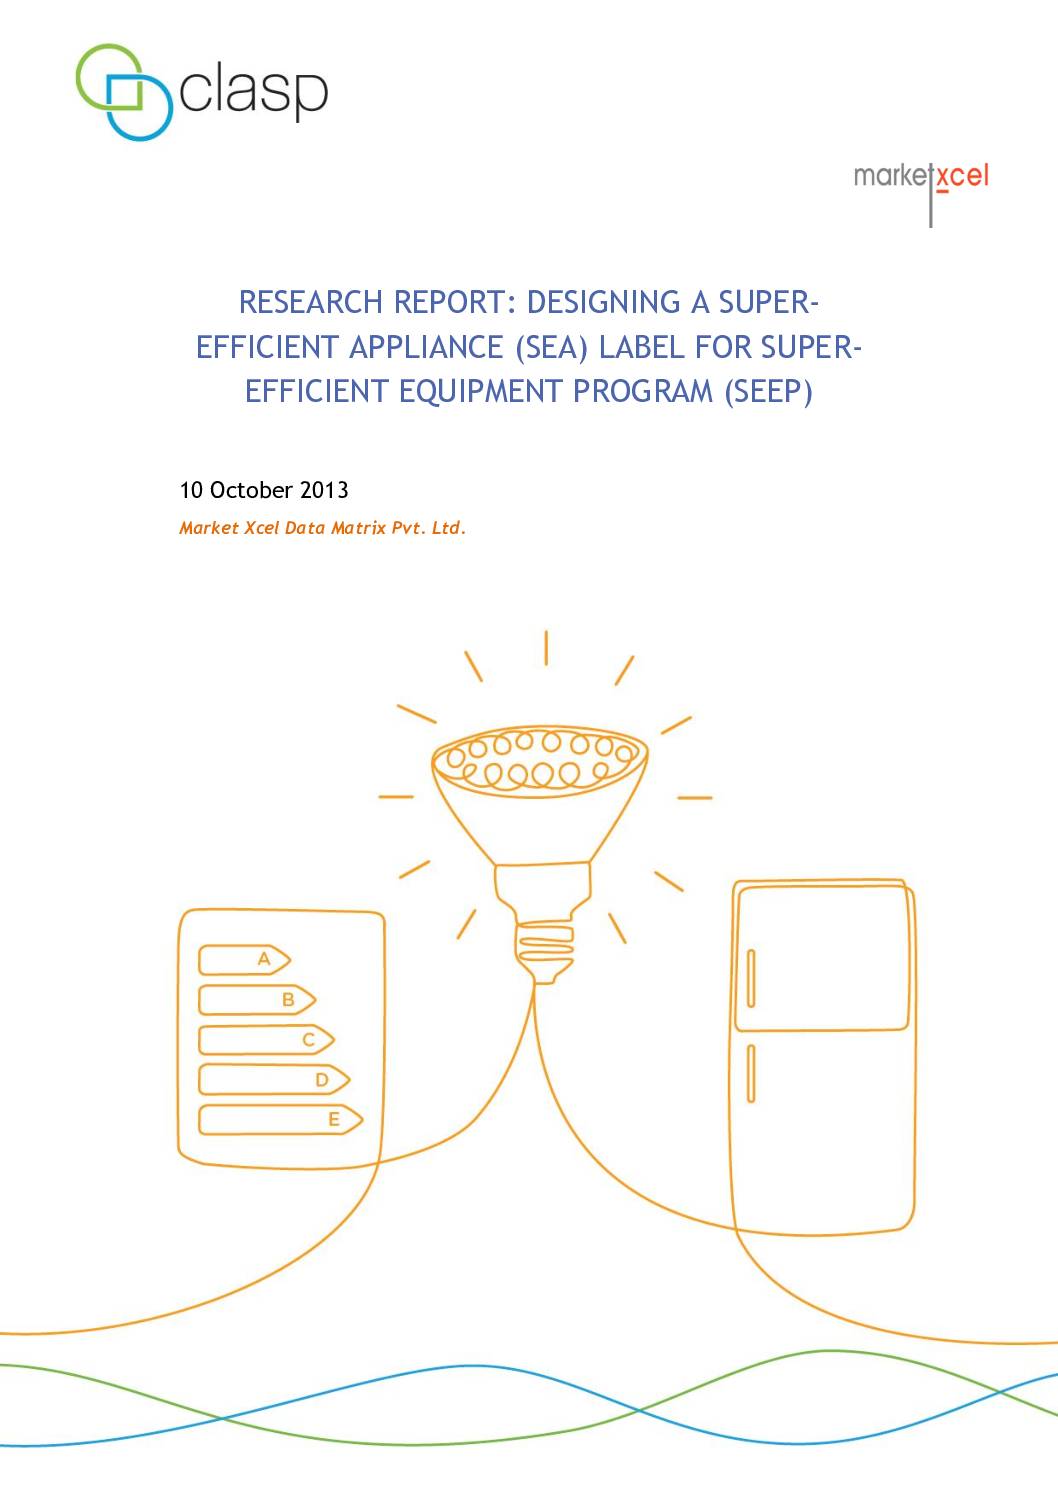 Research Report: Designing a Super Efficient Appliance Label for Super Efficient Equipment Programme (SEEP)